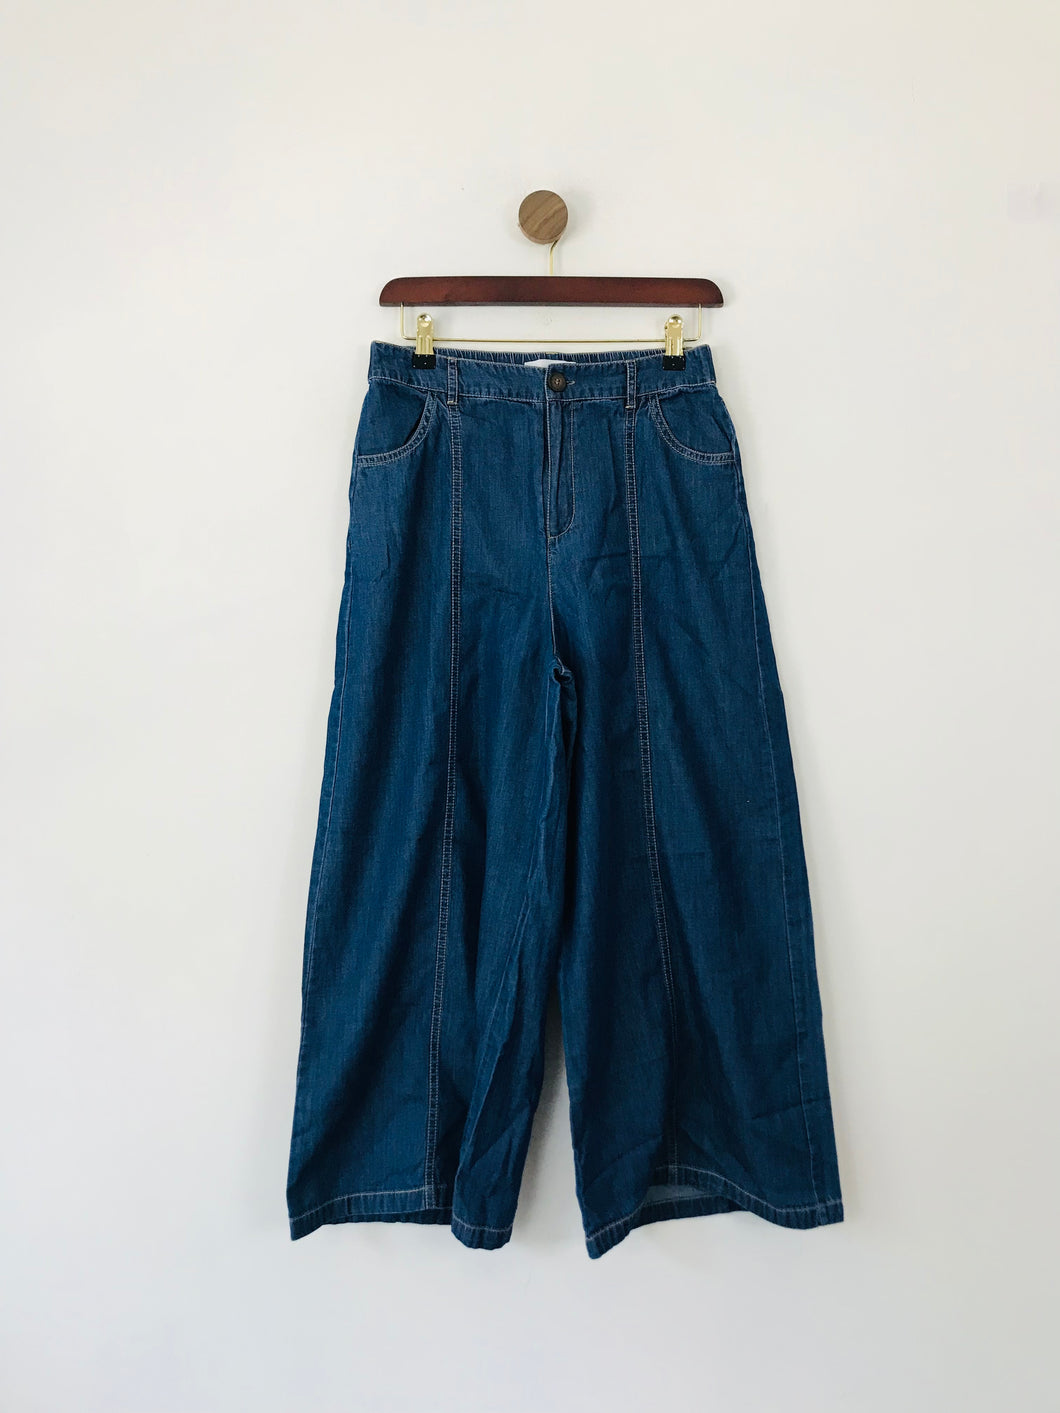 Mango Women's Denim Look Culottes Trousers | M UK10-12 | Blue